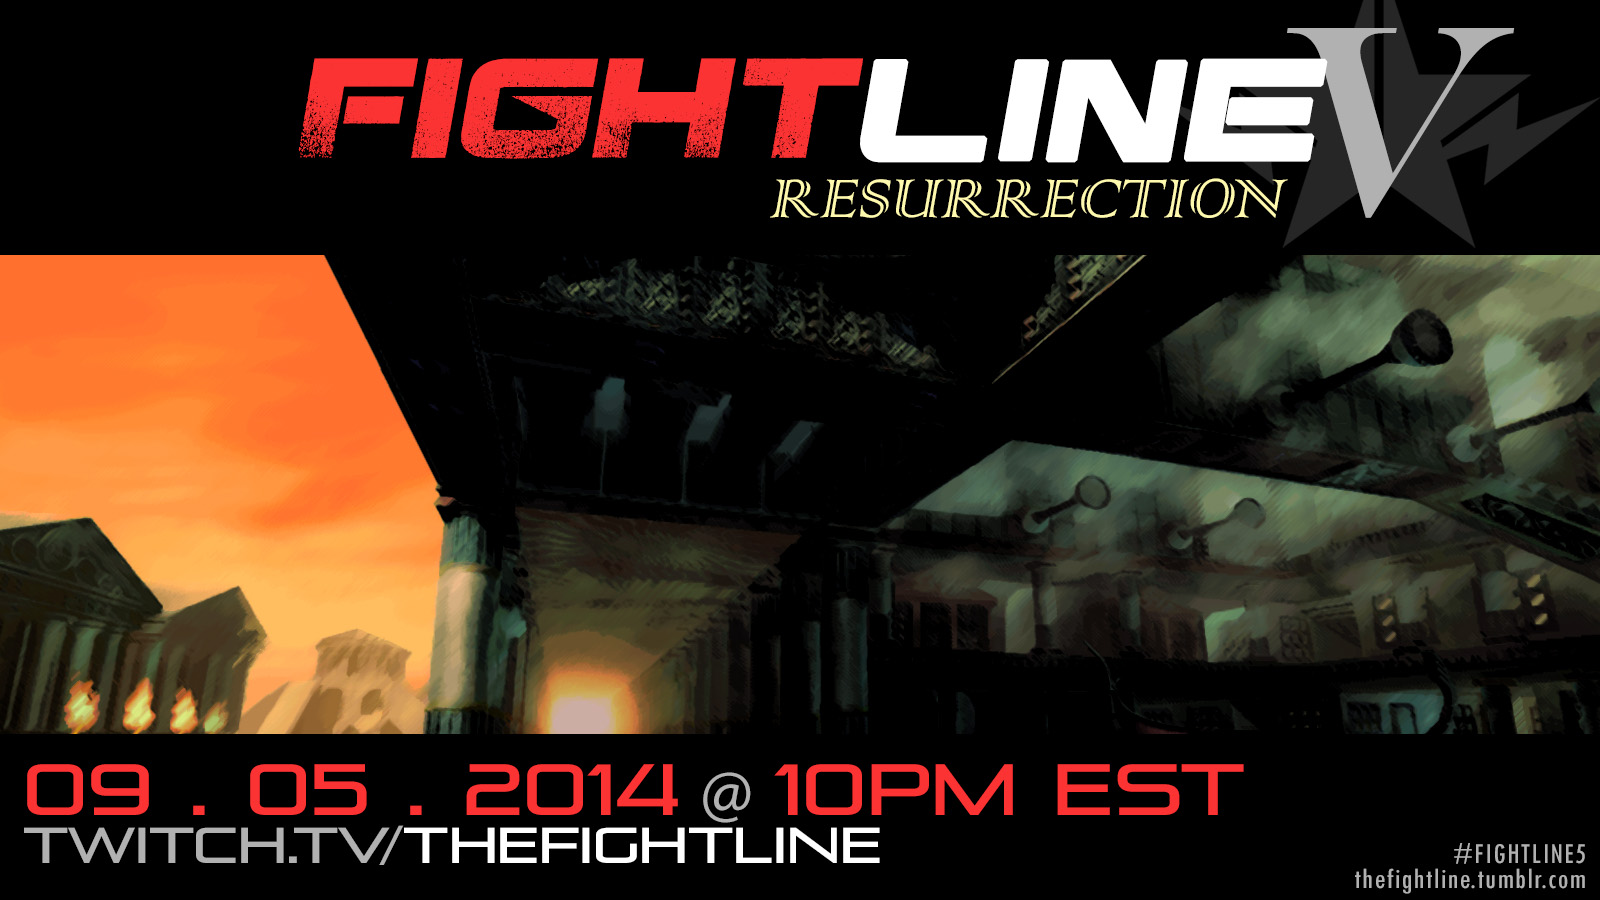 [IMAGE] Fightline 5 Promo